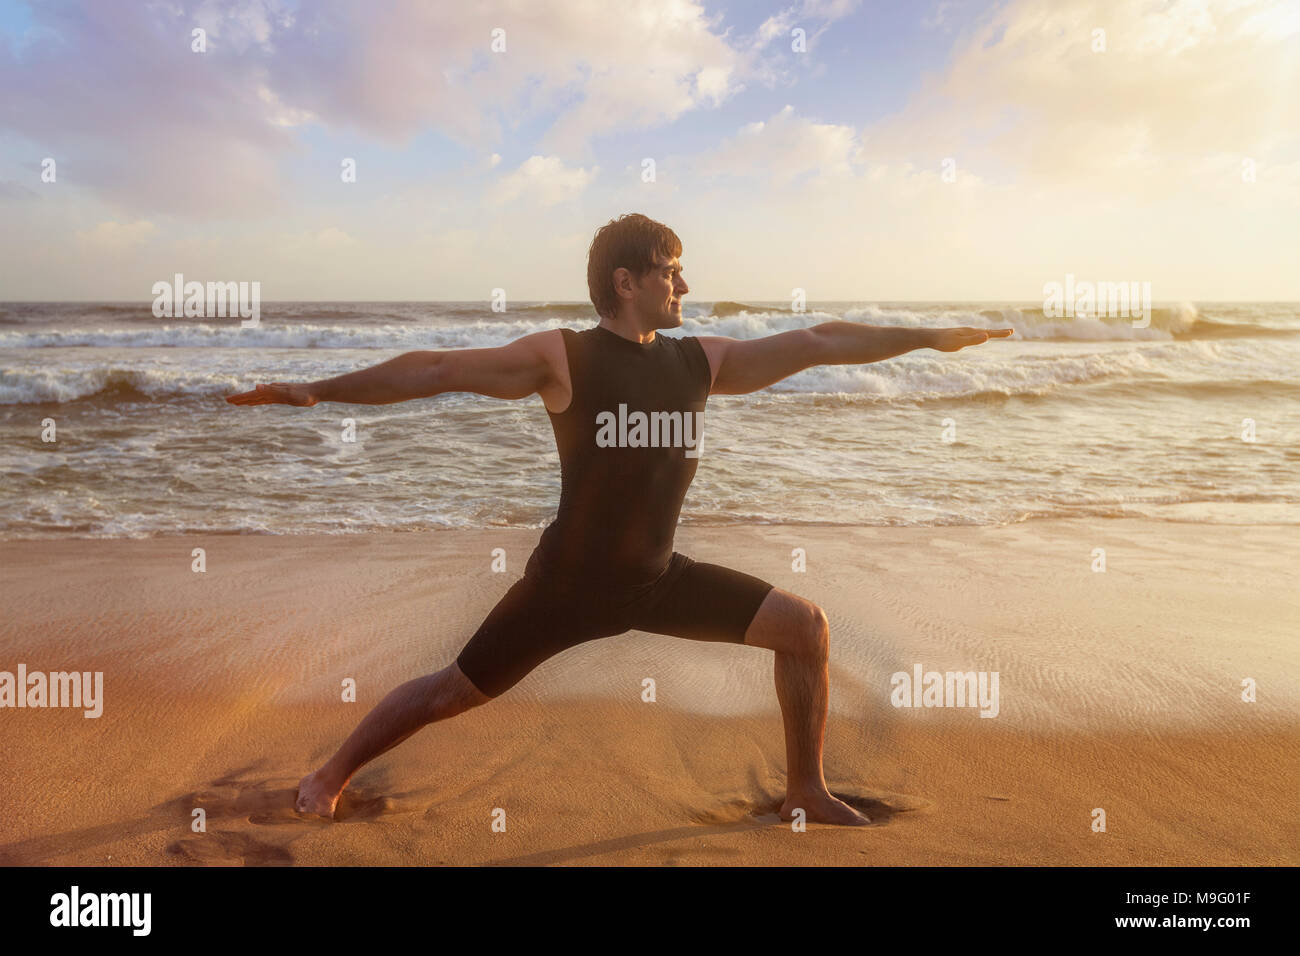 Man doing yoga asana Virabhadrasana 1 Warrior Pose on beach Stock Photo